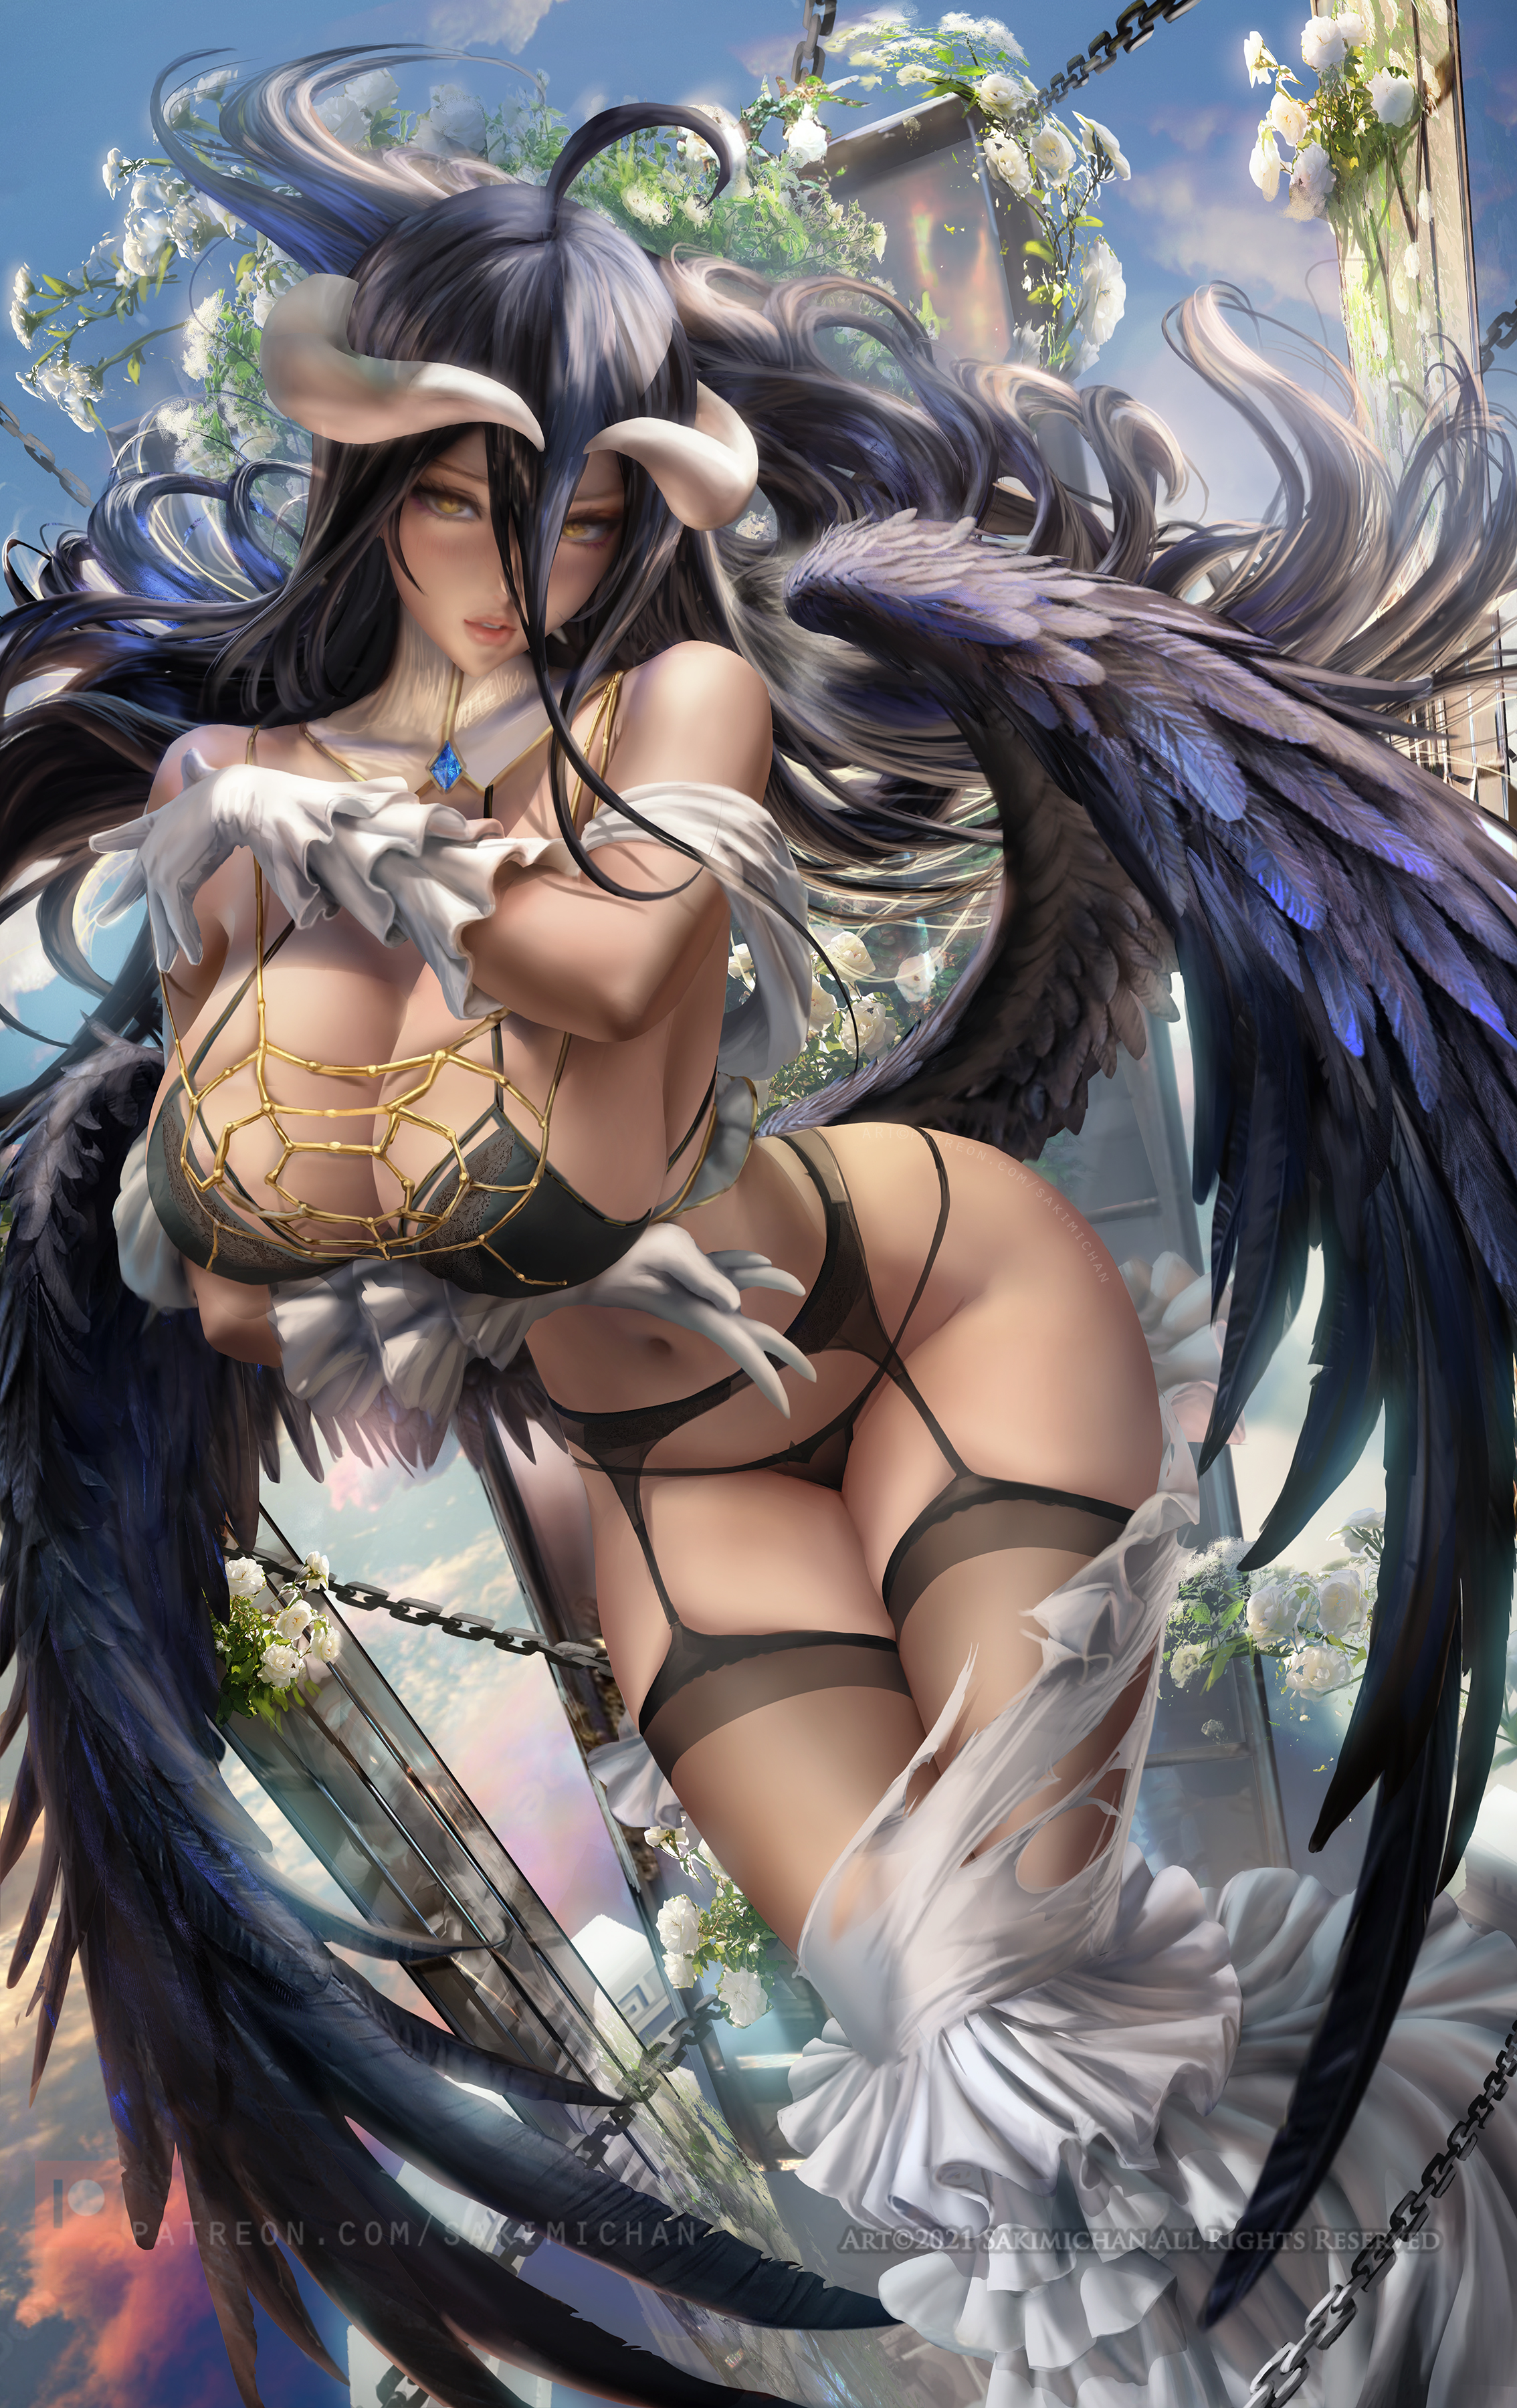 Anime 2268x3600 Albedo (OverLord) big boobs anime girls Sakimichan fan art artwork Overlord stockings garter belt wings horns